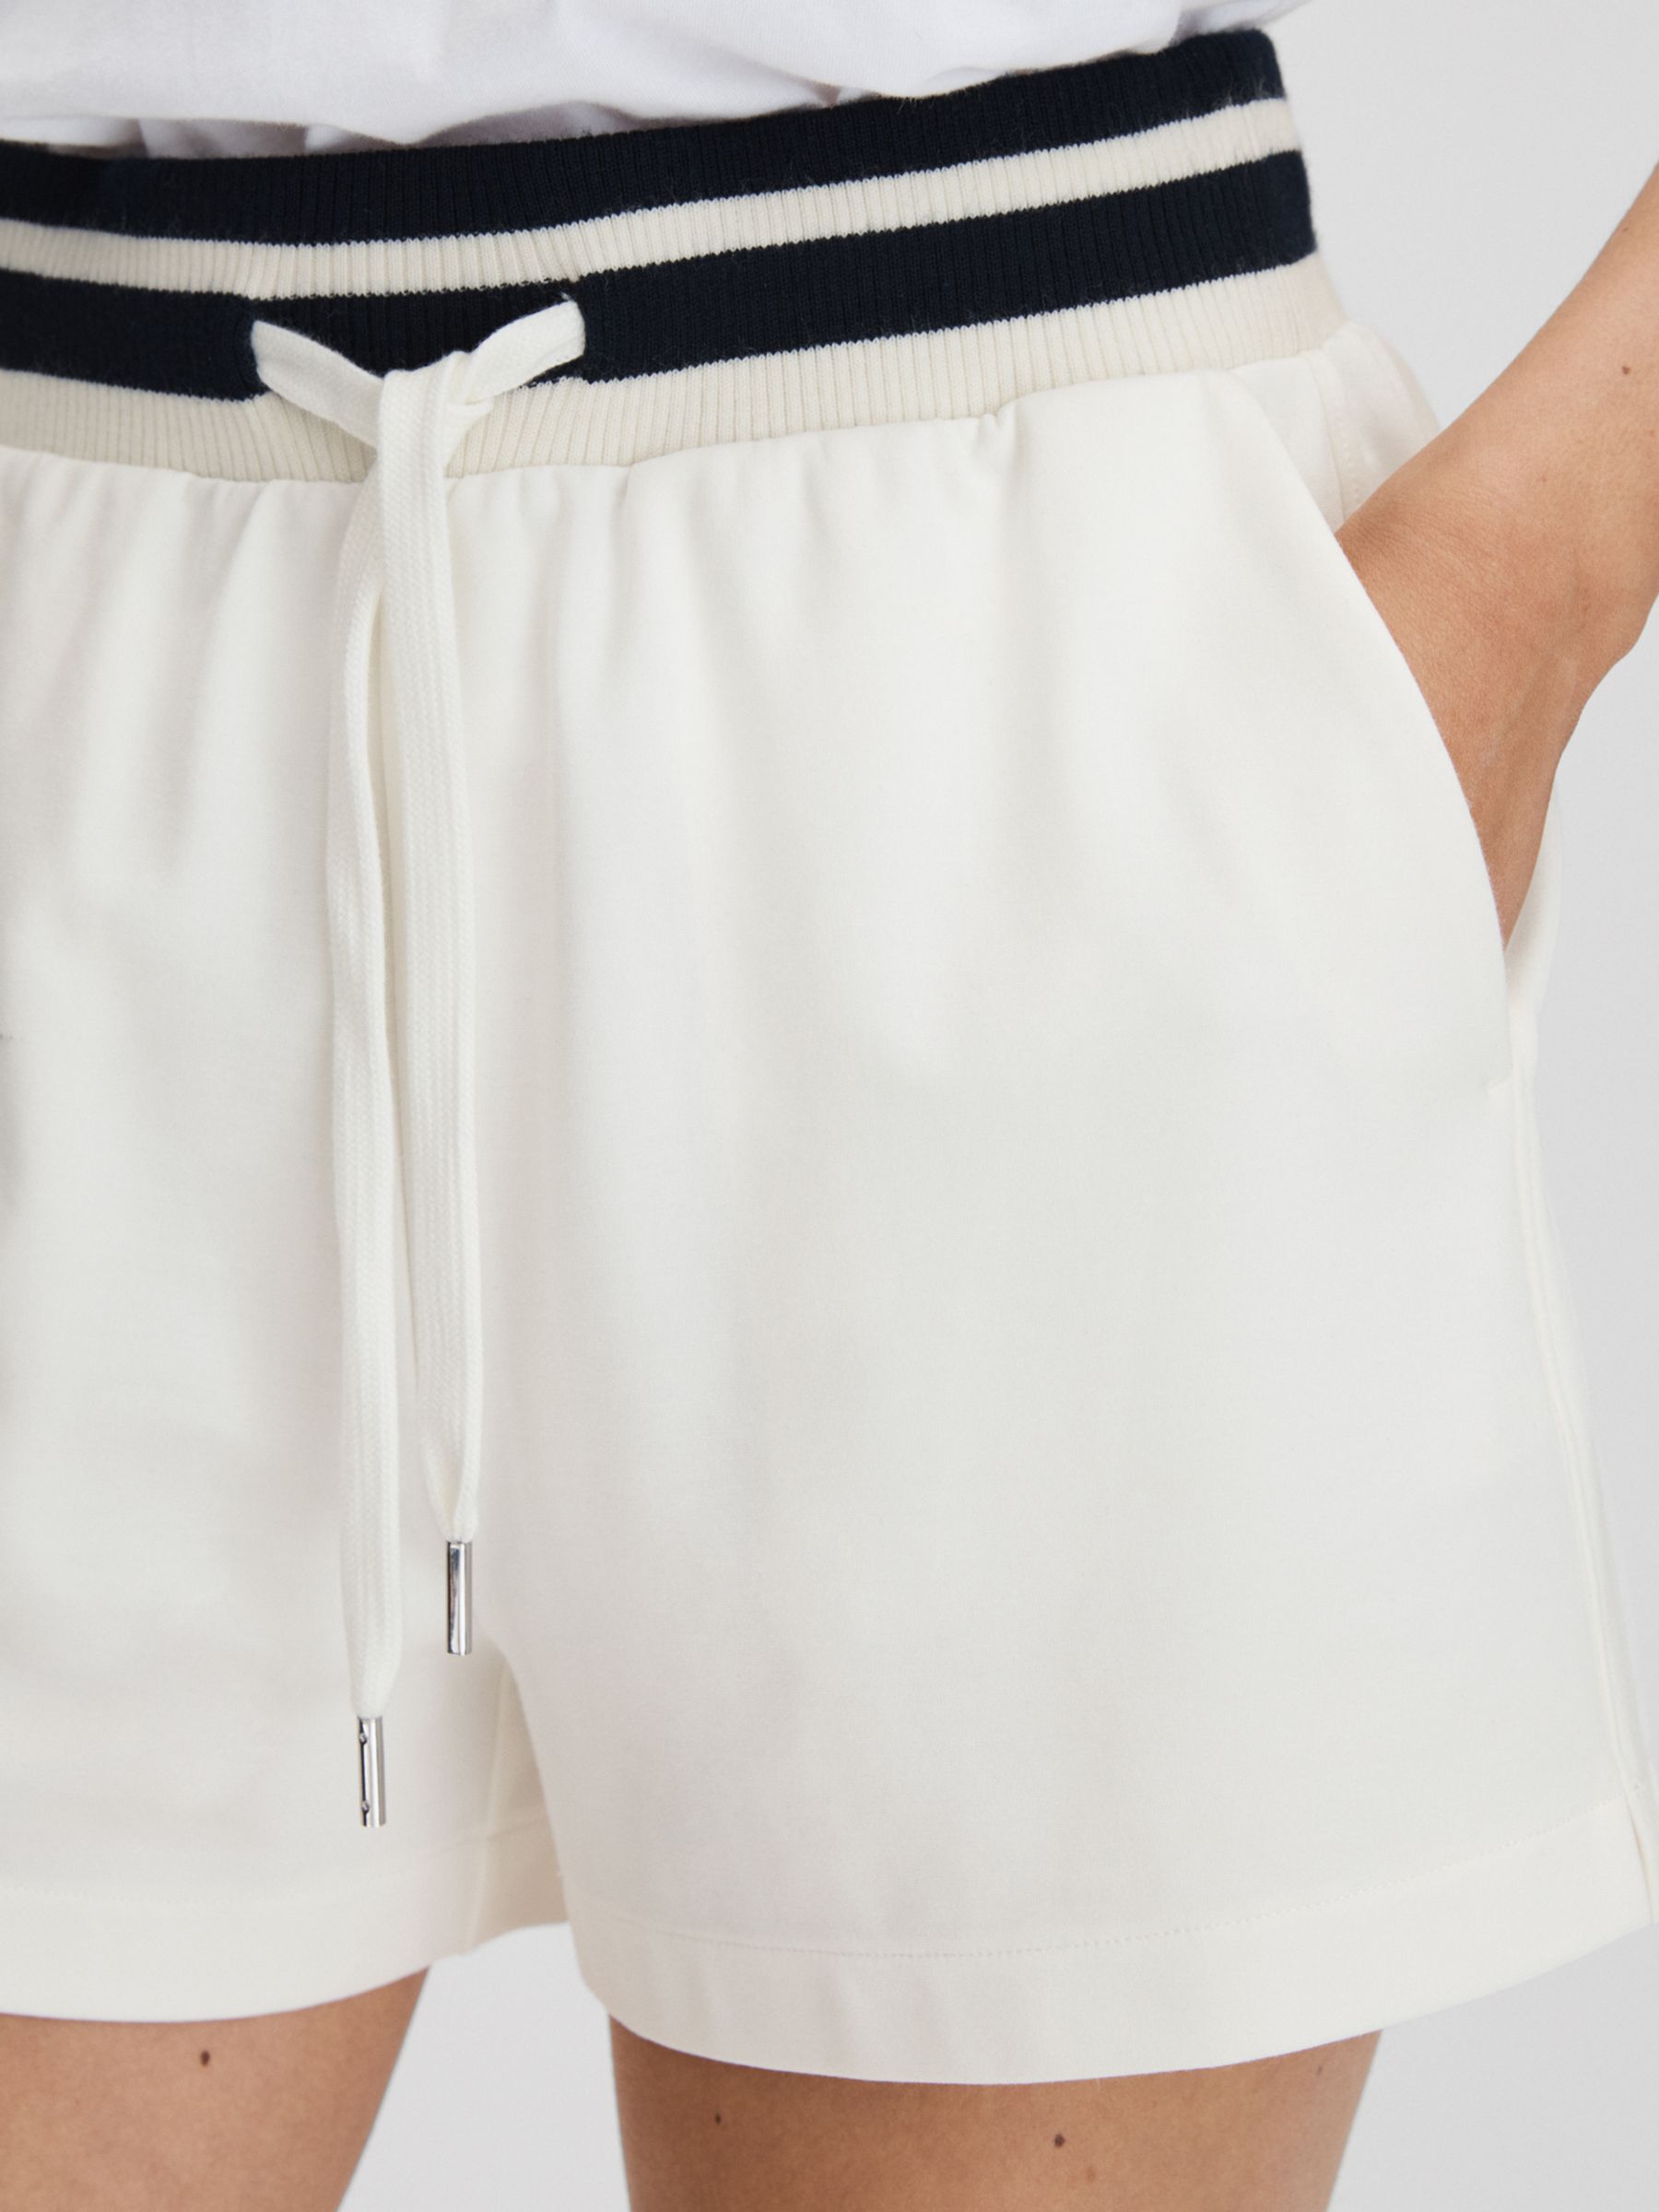 Reiss Lexi Stripe Waistband Shorts, Navy/Ivory, XS